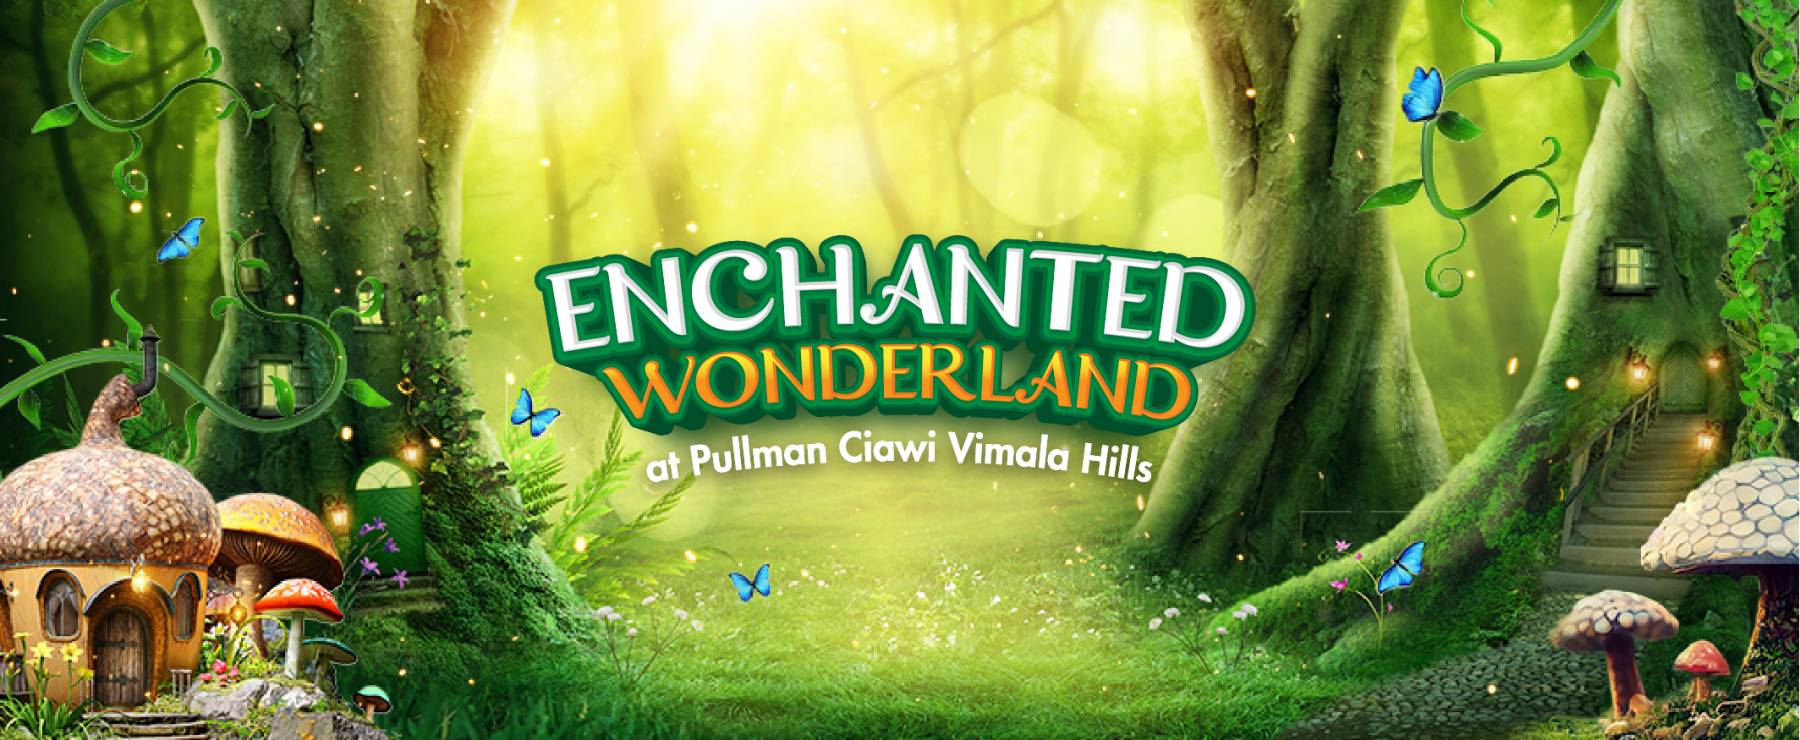 Enchanted Wonderland